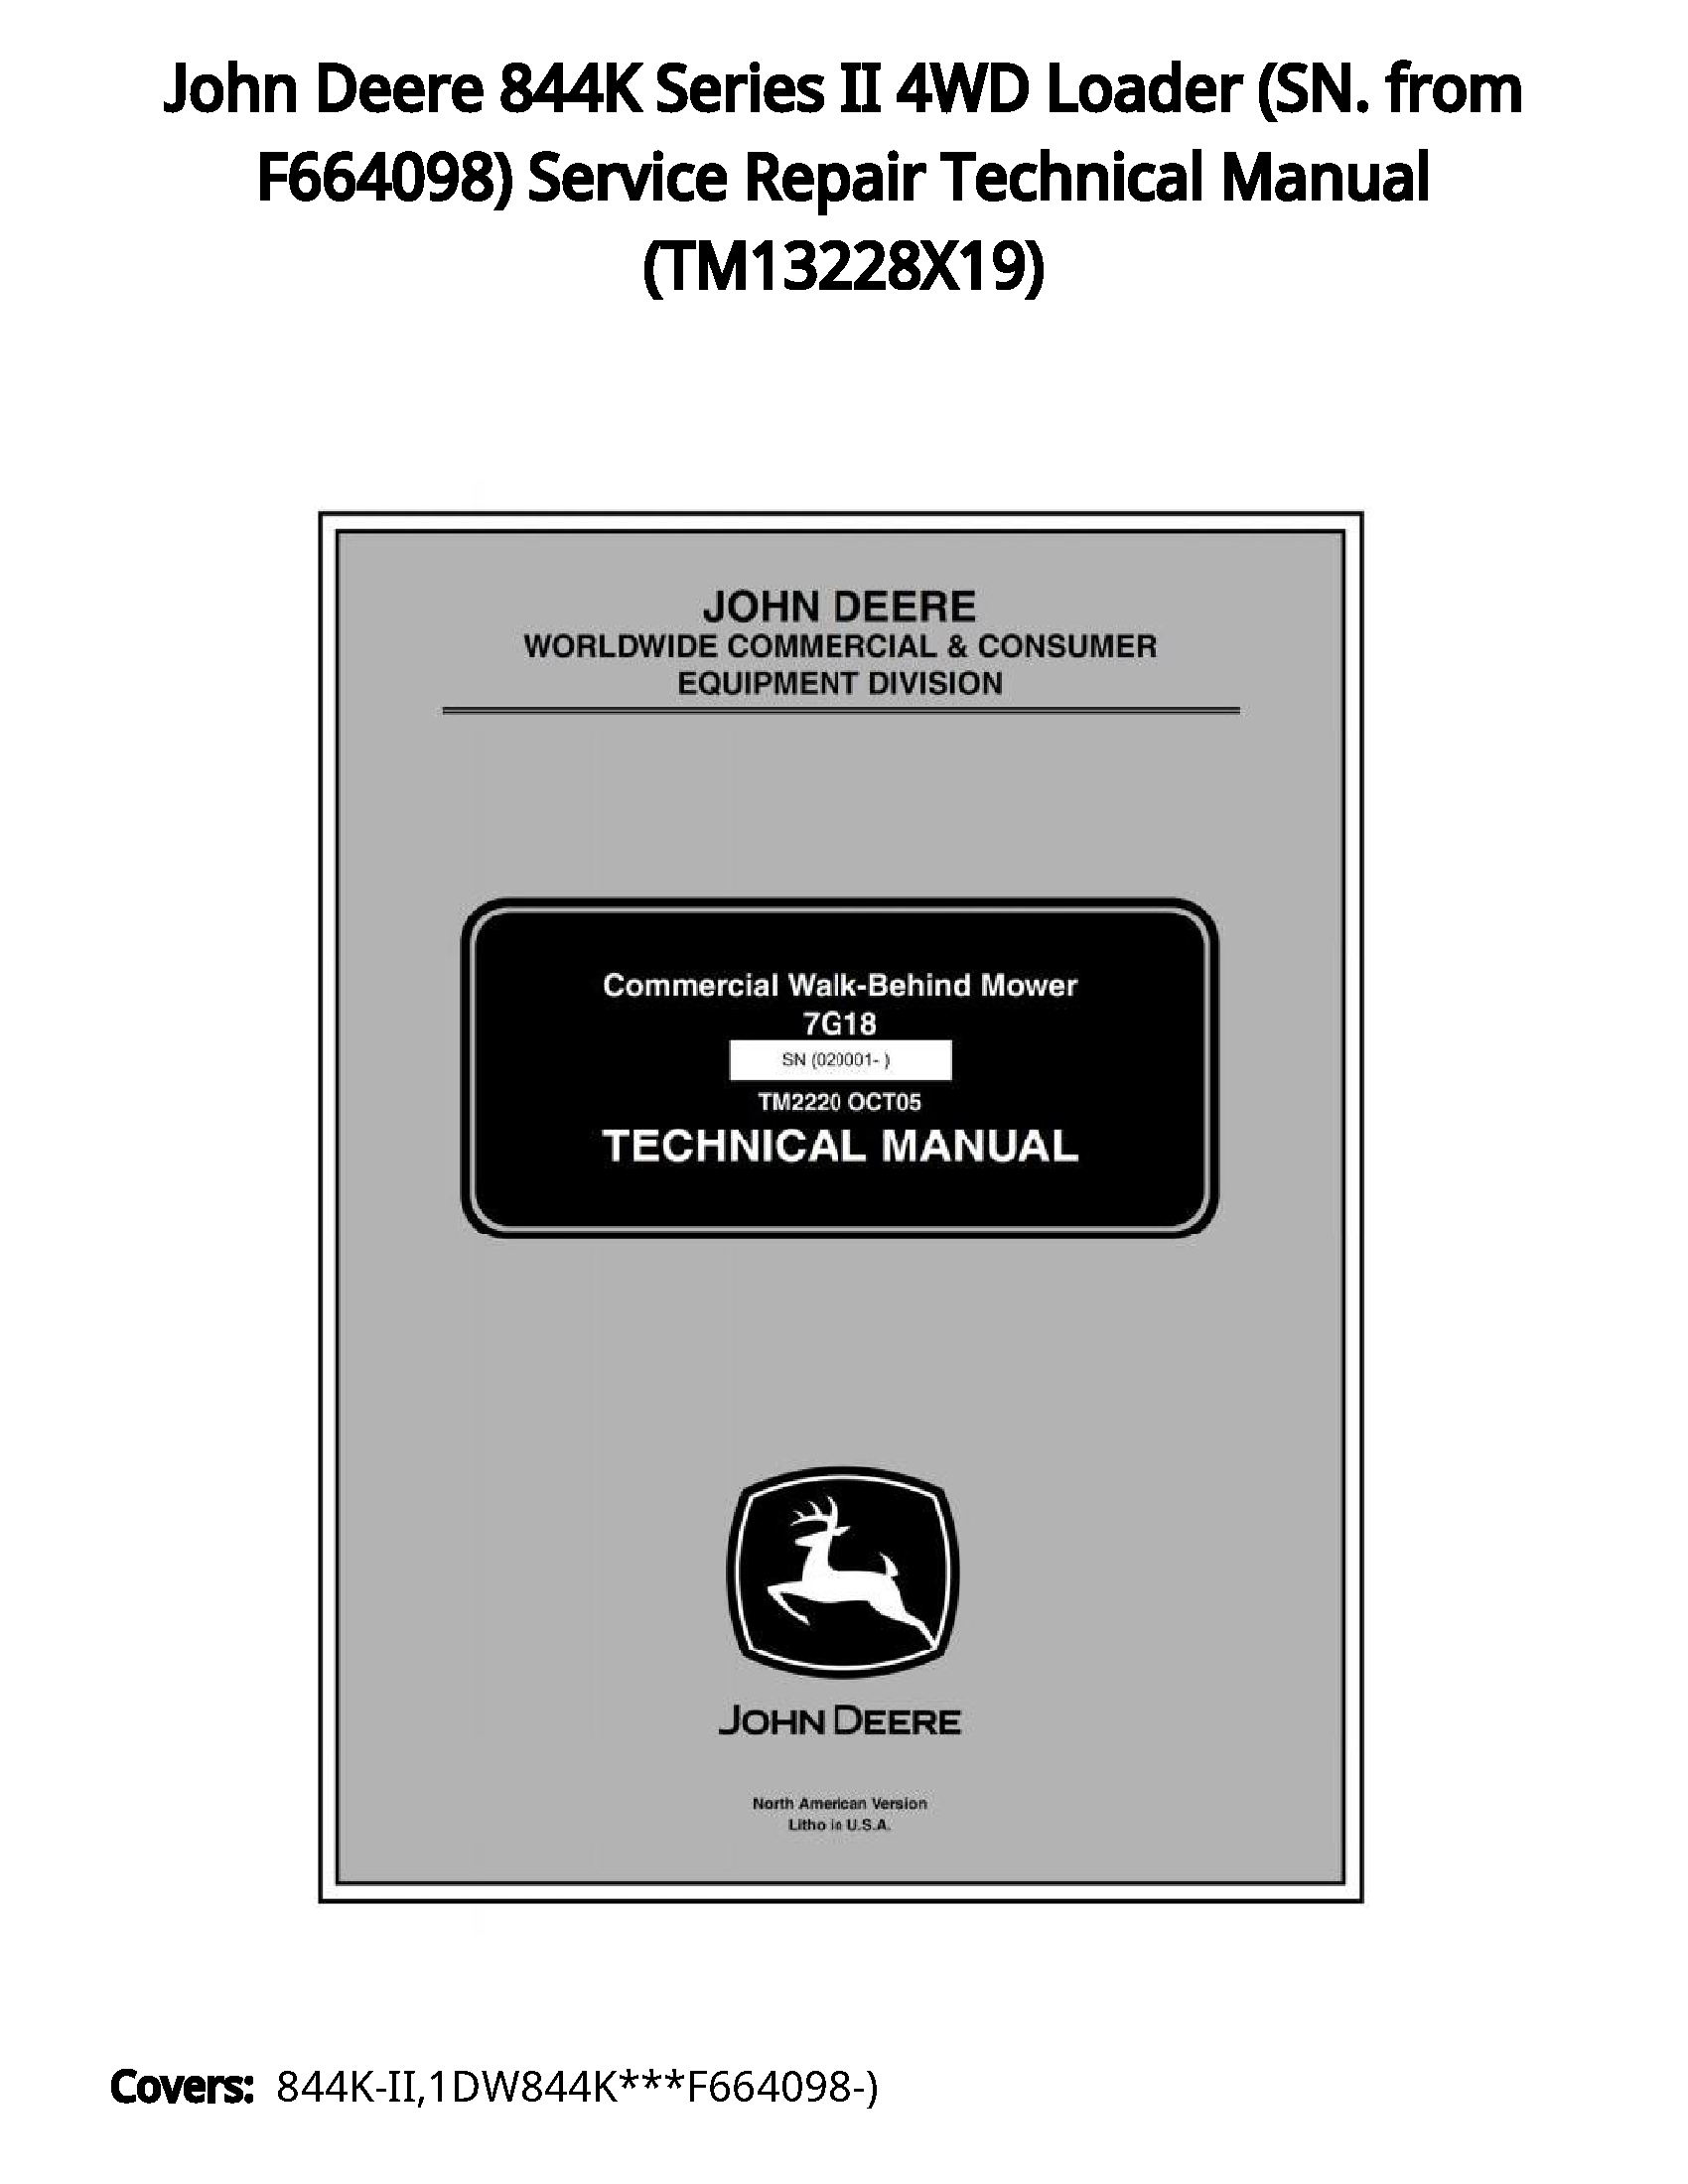 John Deere 844K Series II 4WD Loader (SN. from F664098) Service Repair Technical Manual - TM13228X19